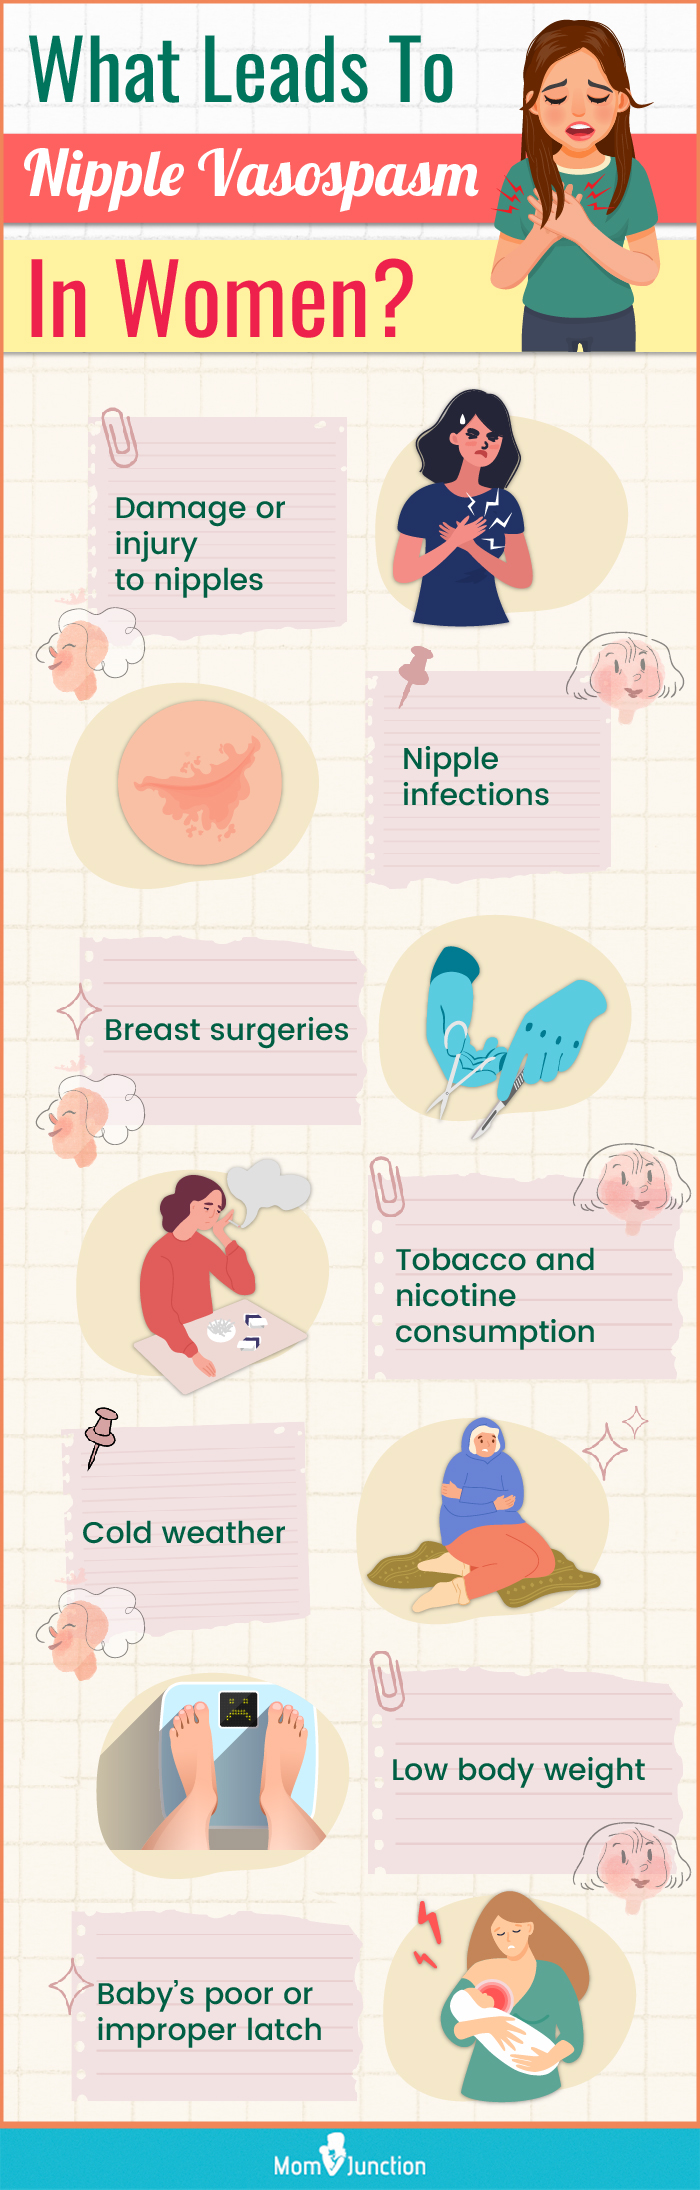 what leads to nipple vasospasm in women? (infographic)